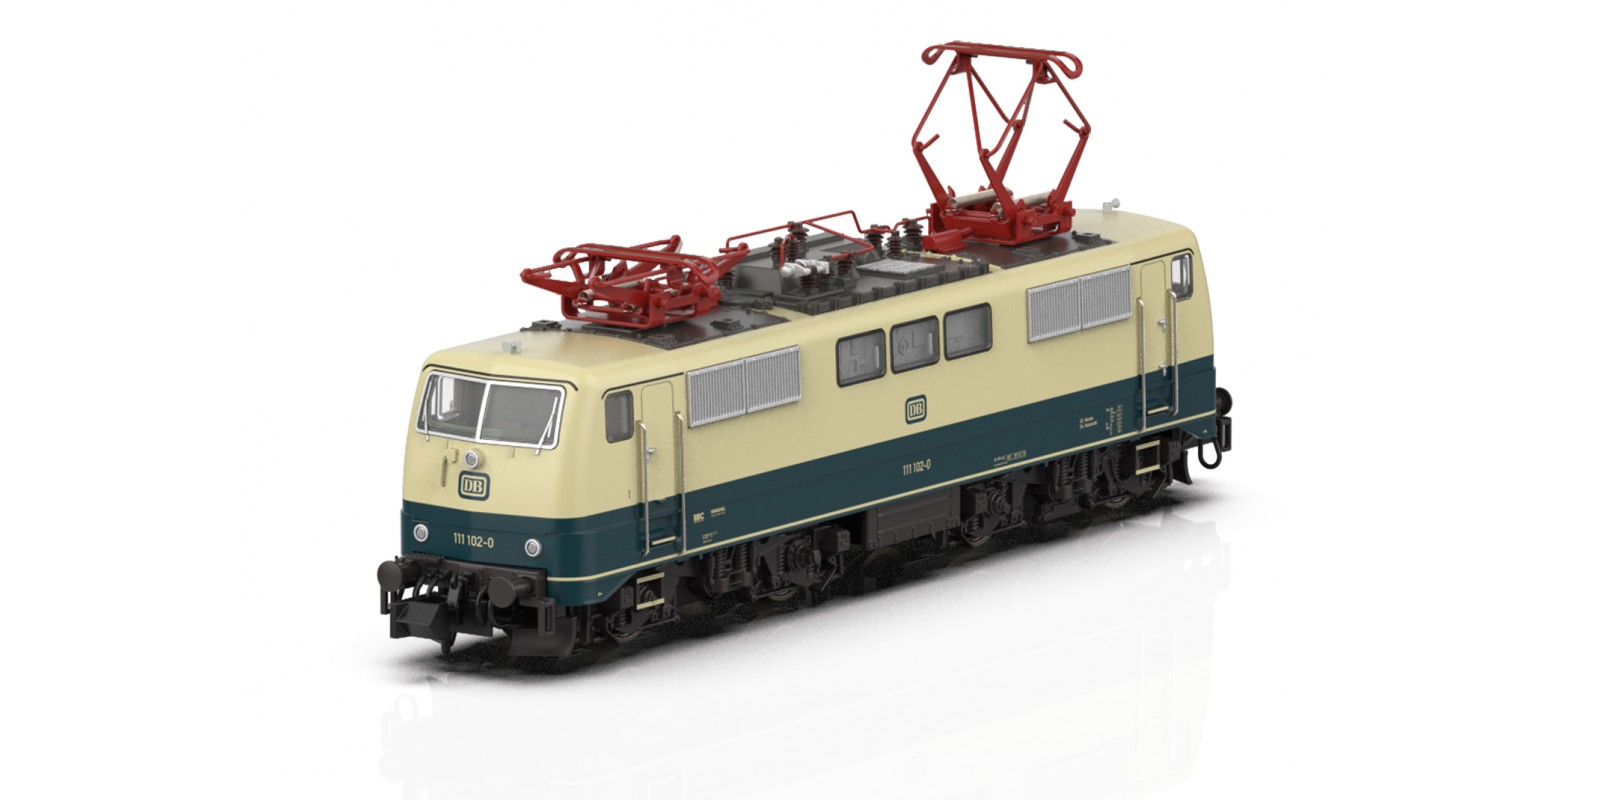 T16721 Class 111 Electric Locomotive